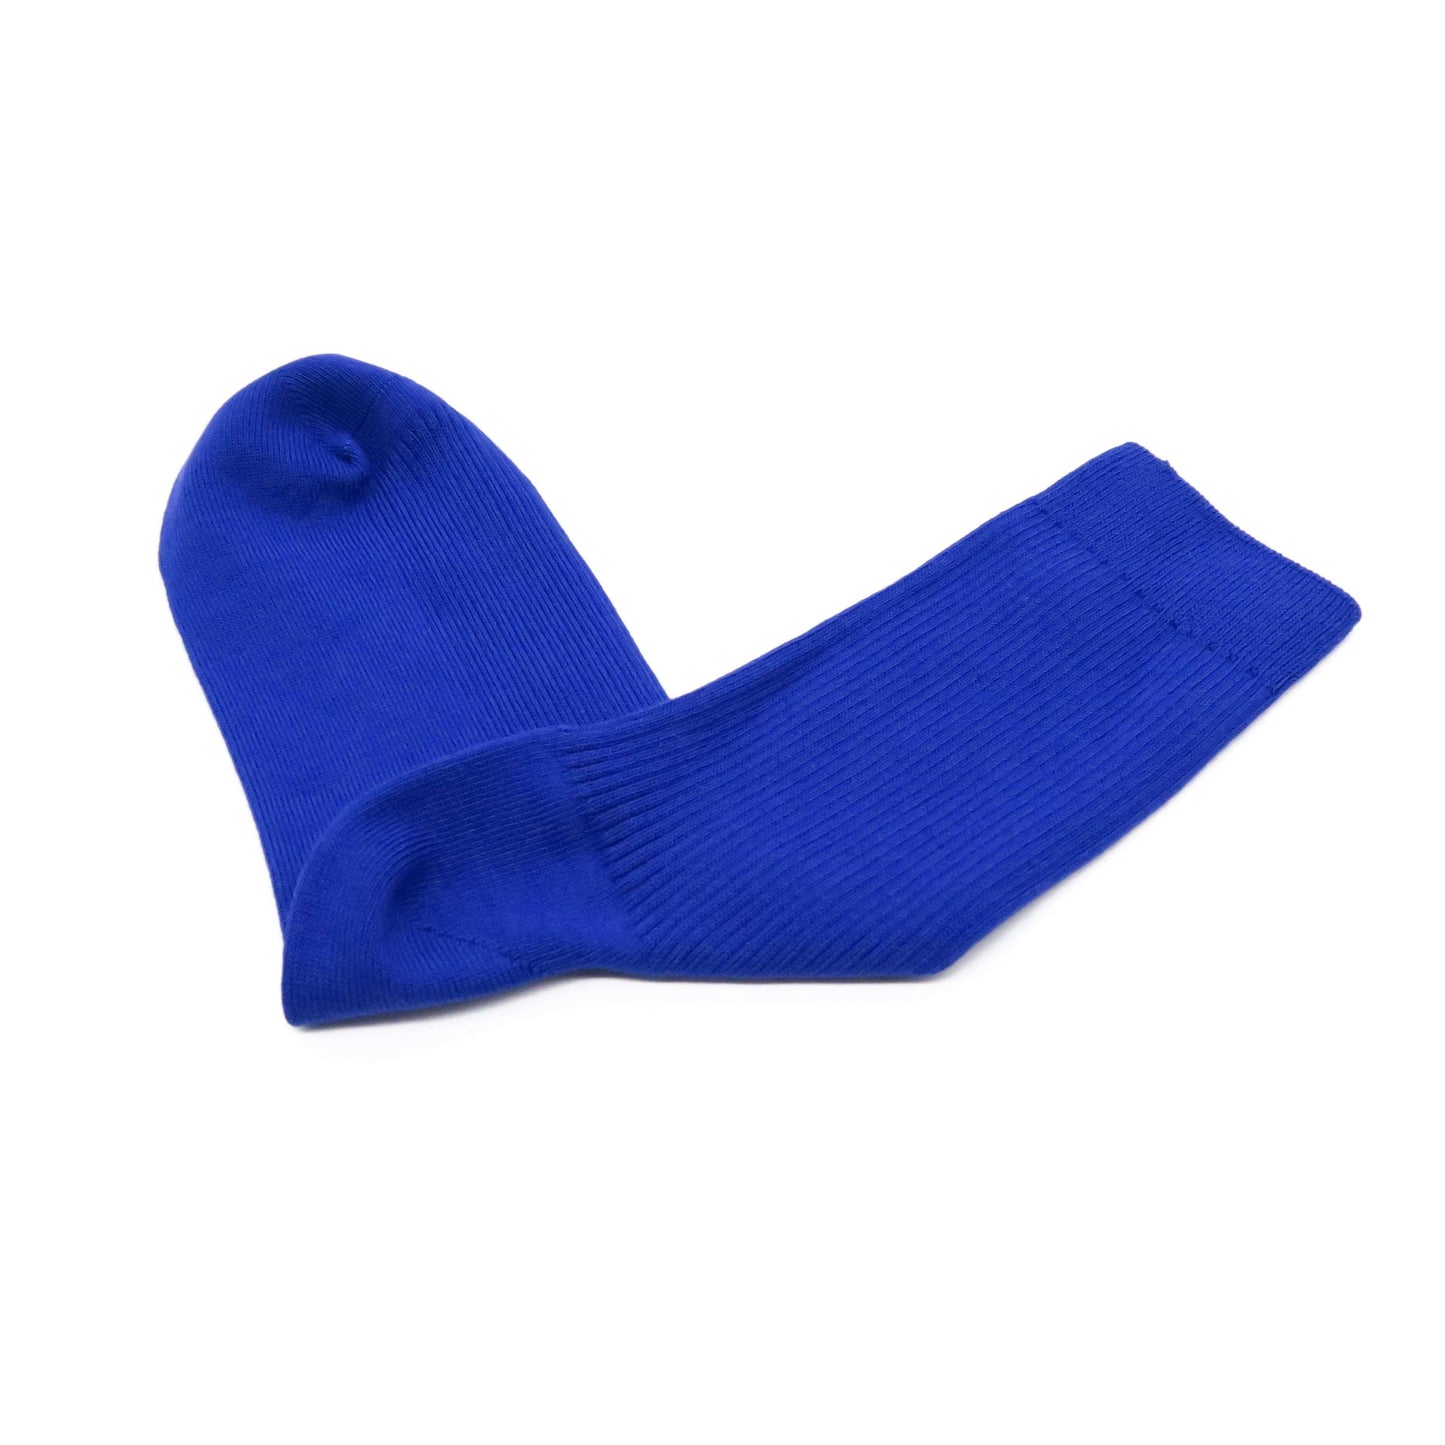 bright blue crew sock - comfysocks